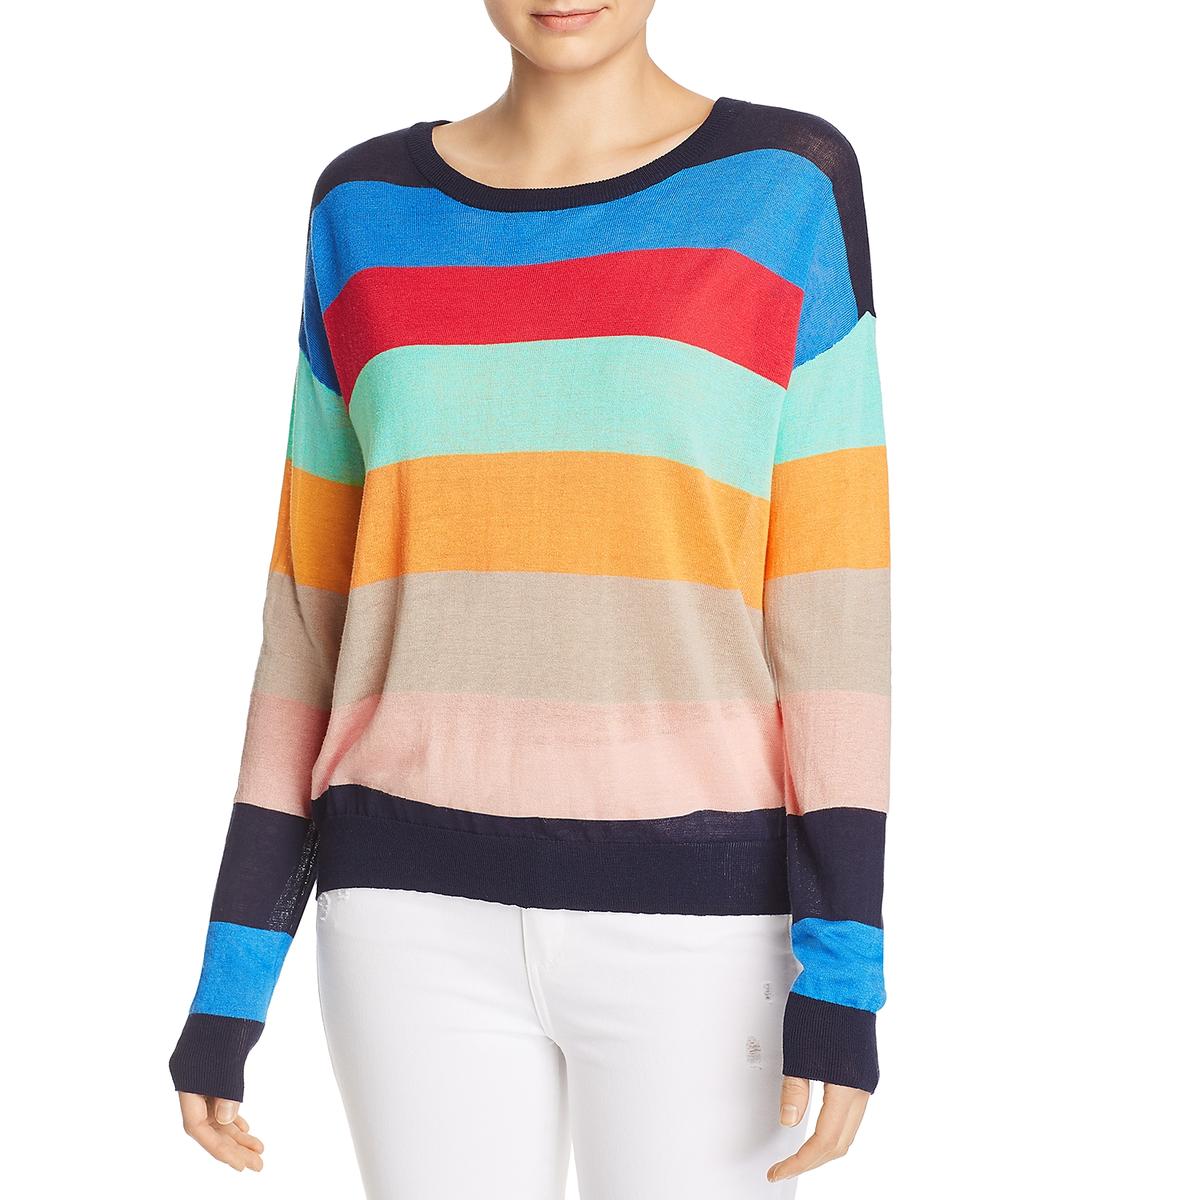 Splendid Womens Multi Knit Colorblock Striped Pullover Sweater Top XS ...